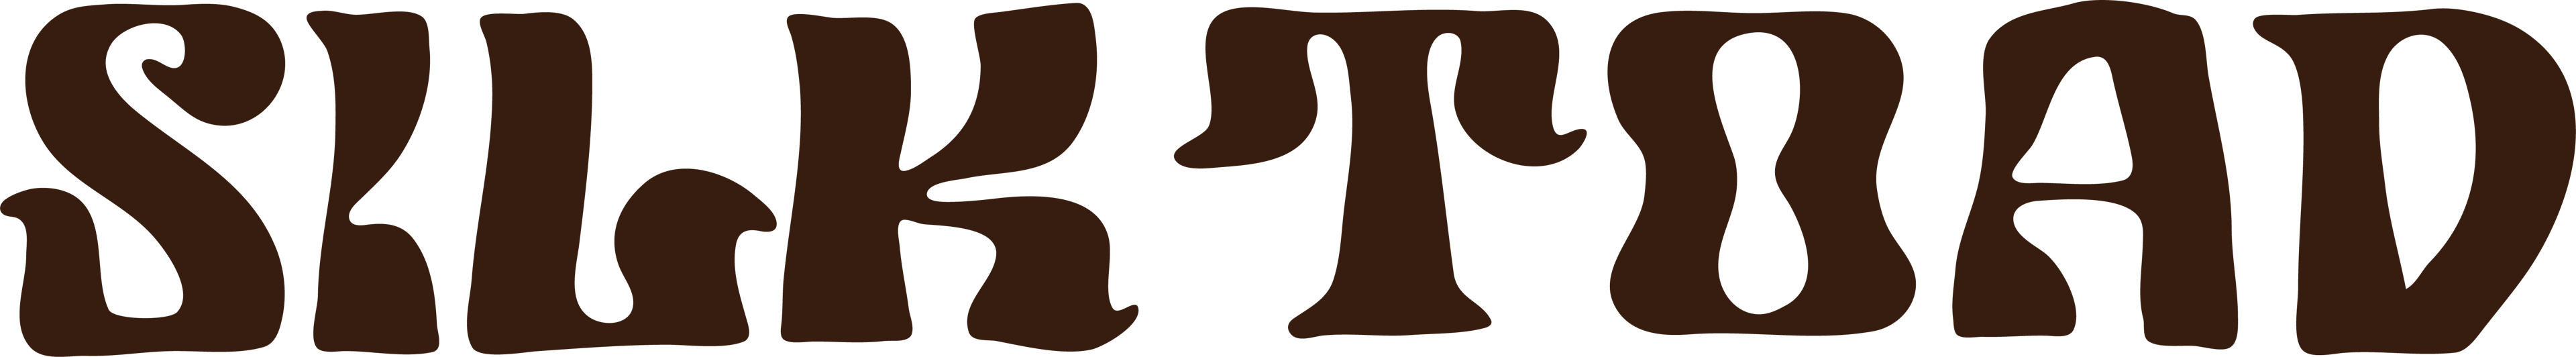 Silktoad logo